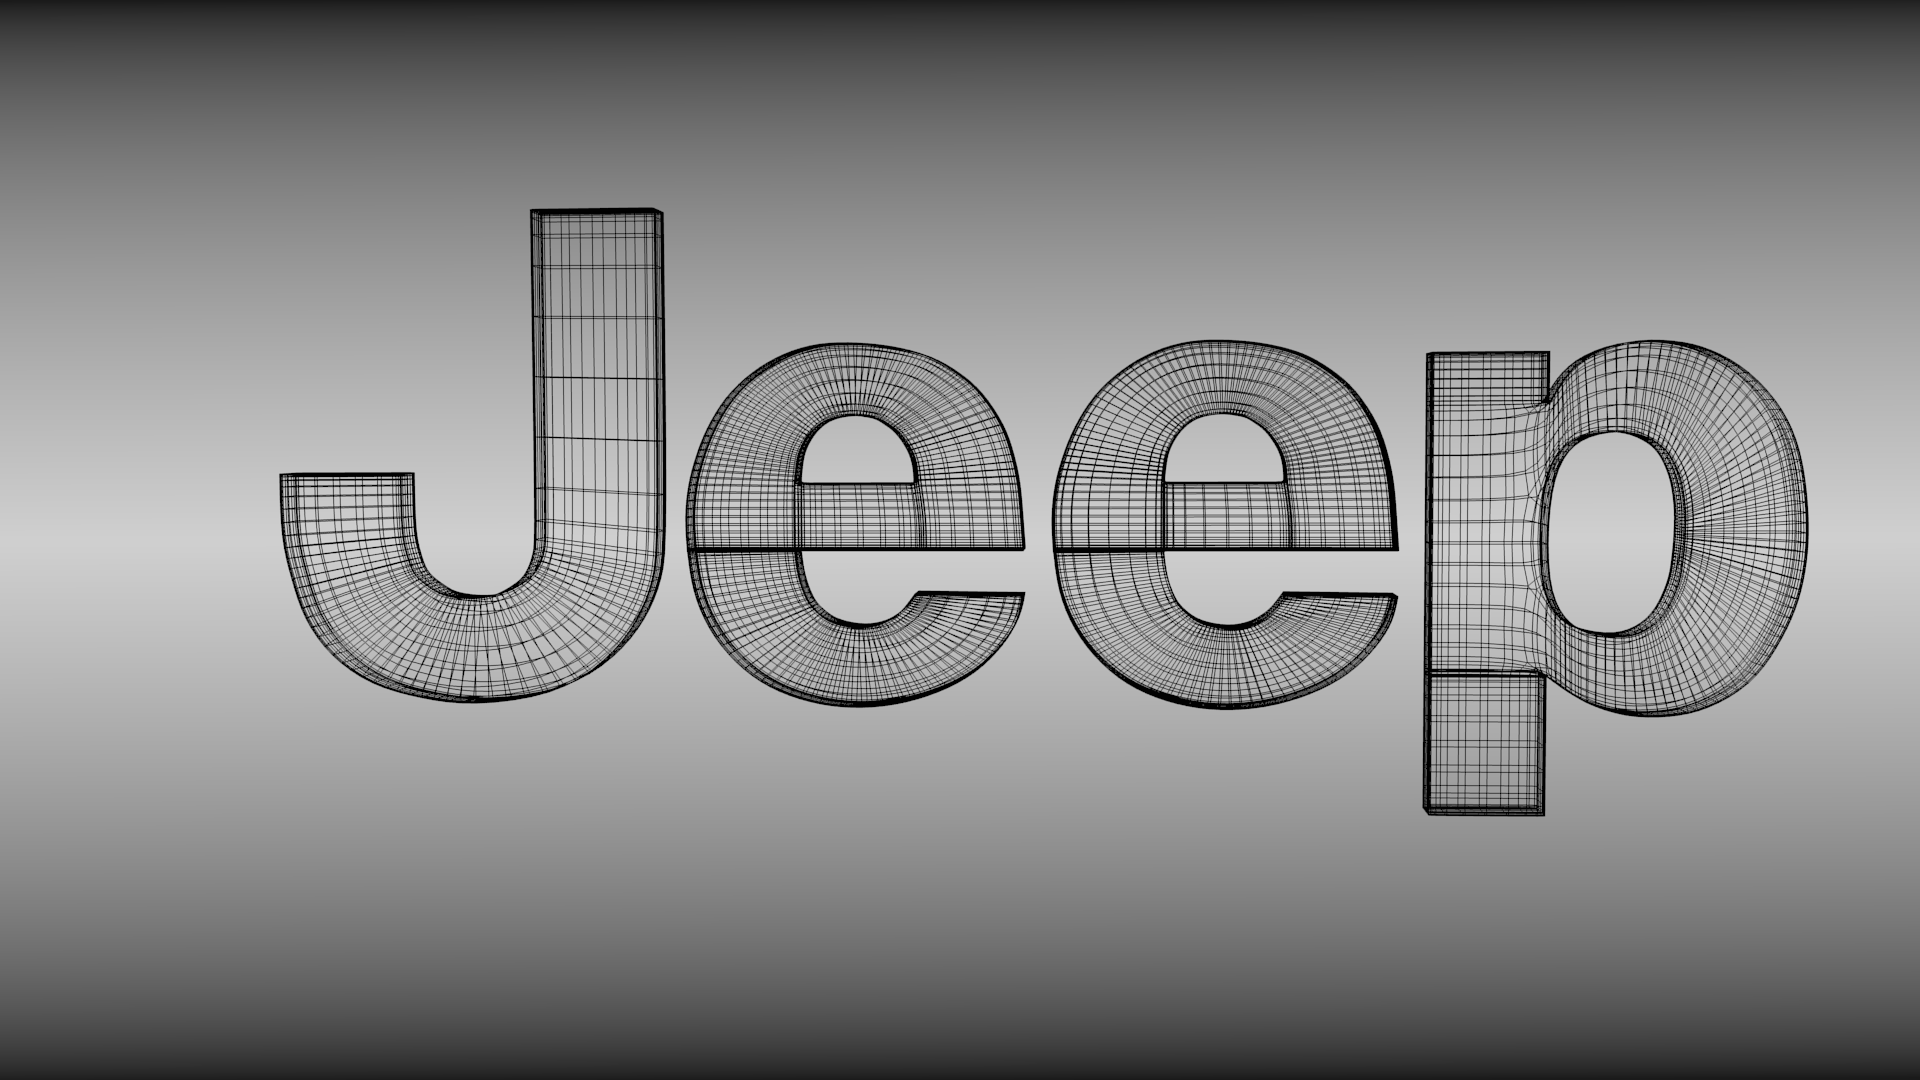 Awesome Jeep Logo - Jeep Logo Wallpapers | wallpaper.wiki